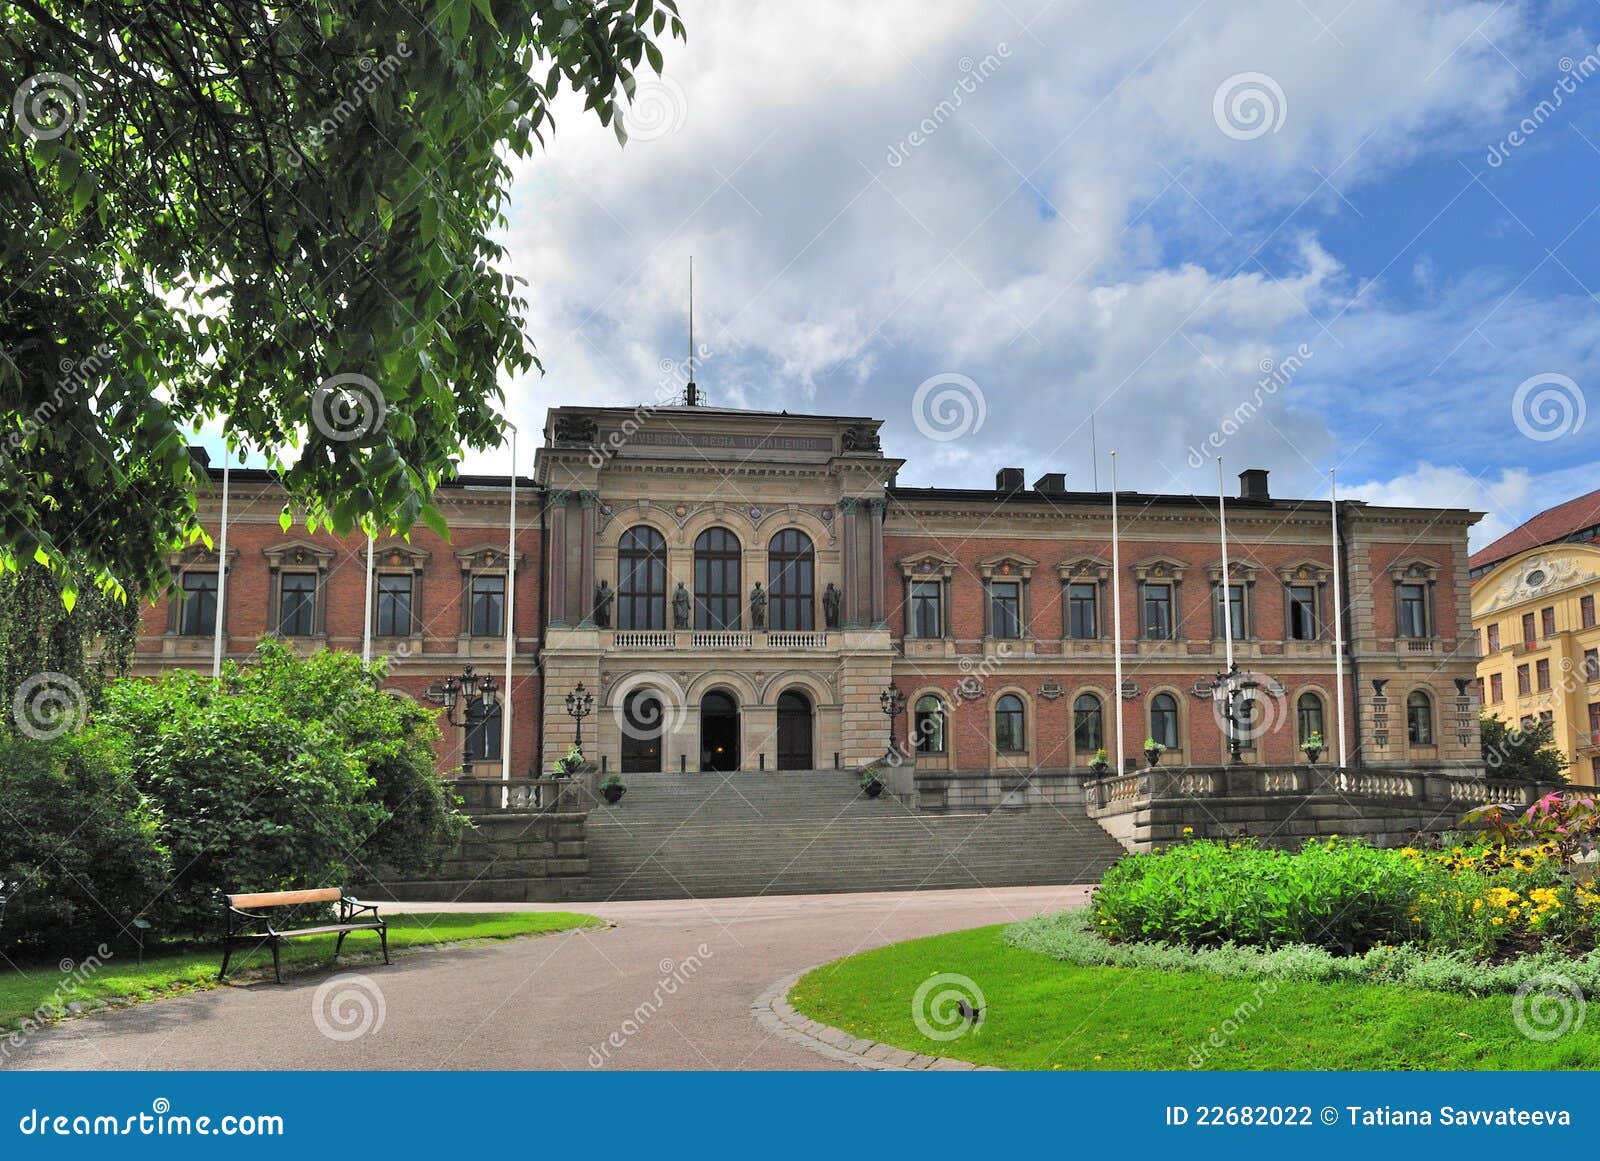 sweden. university of uppsala